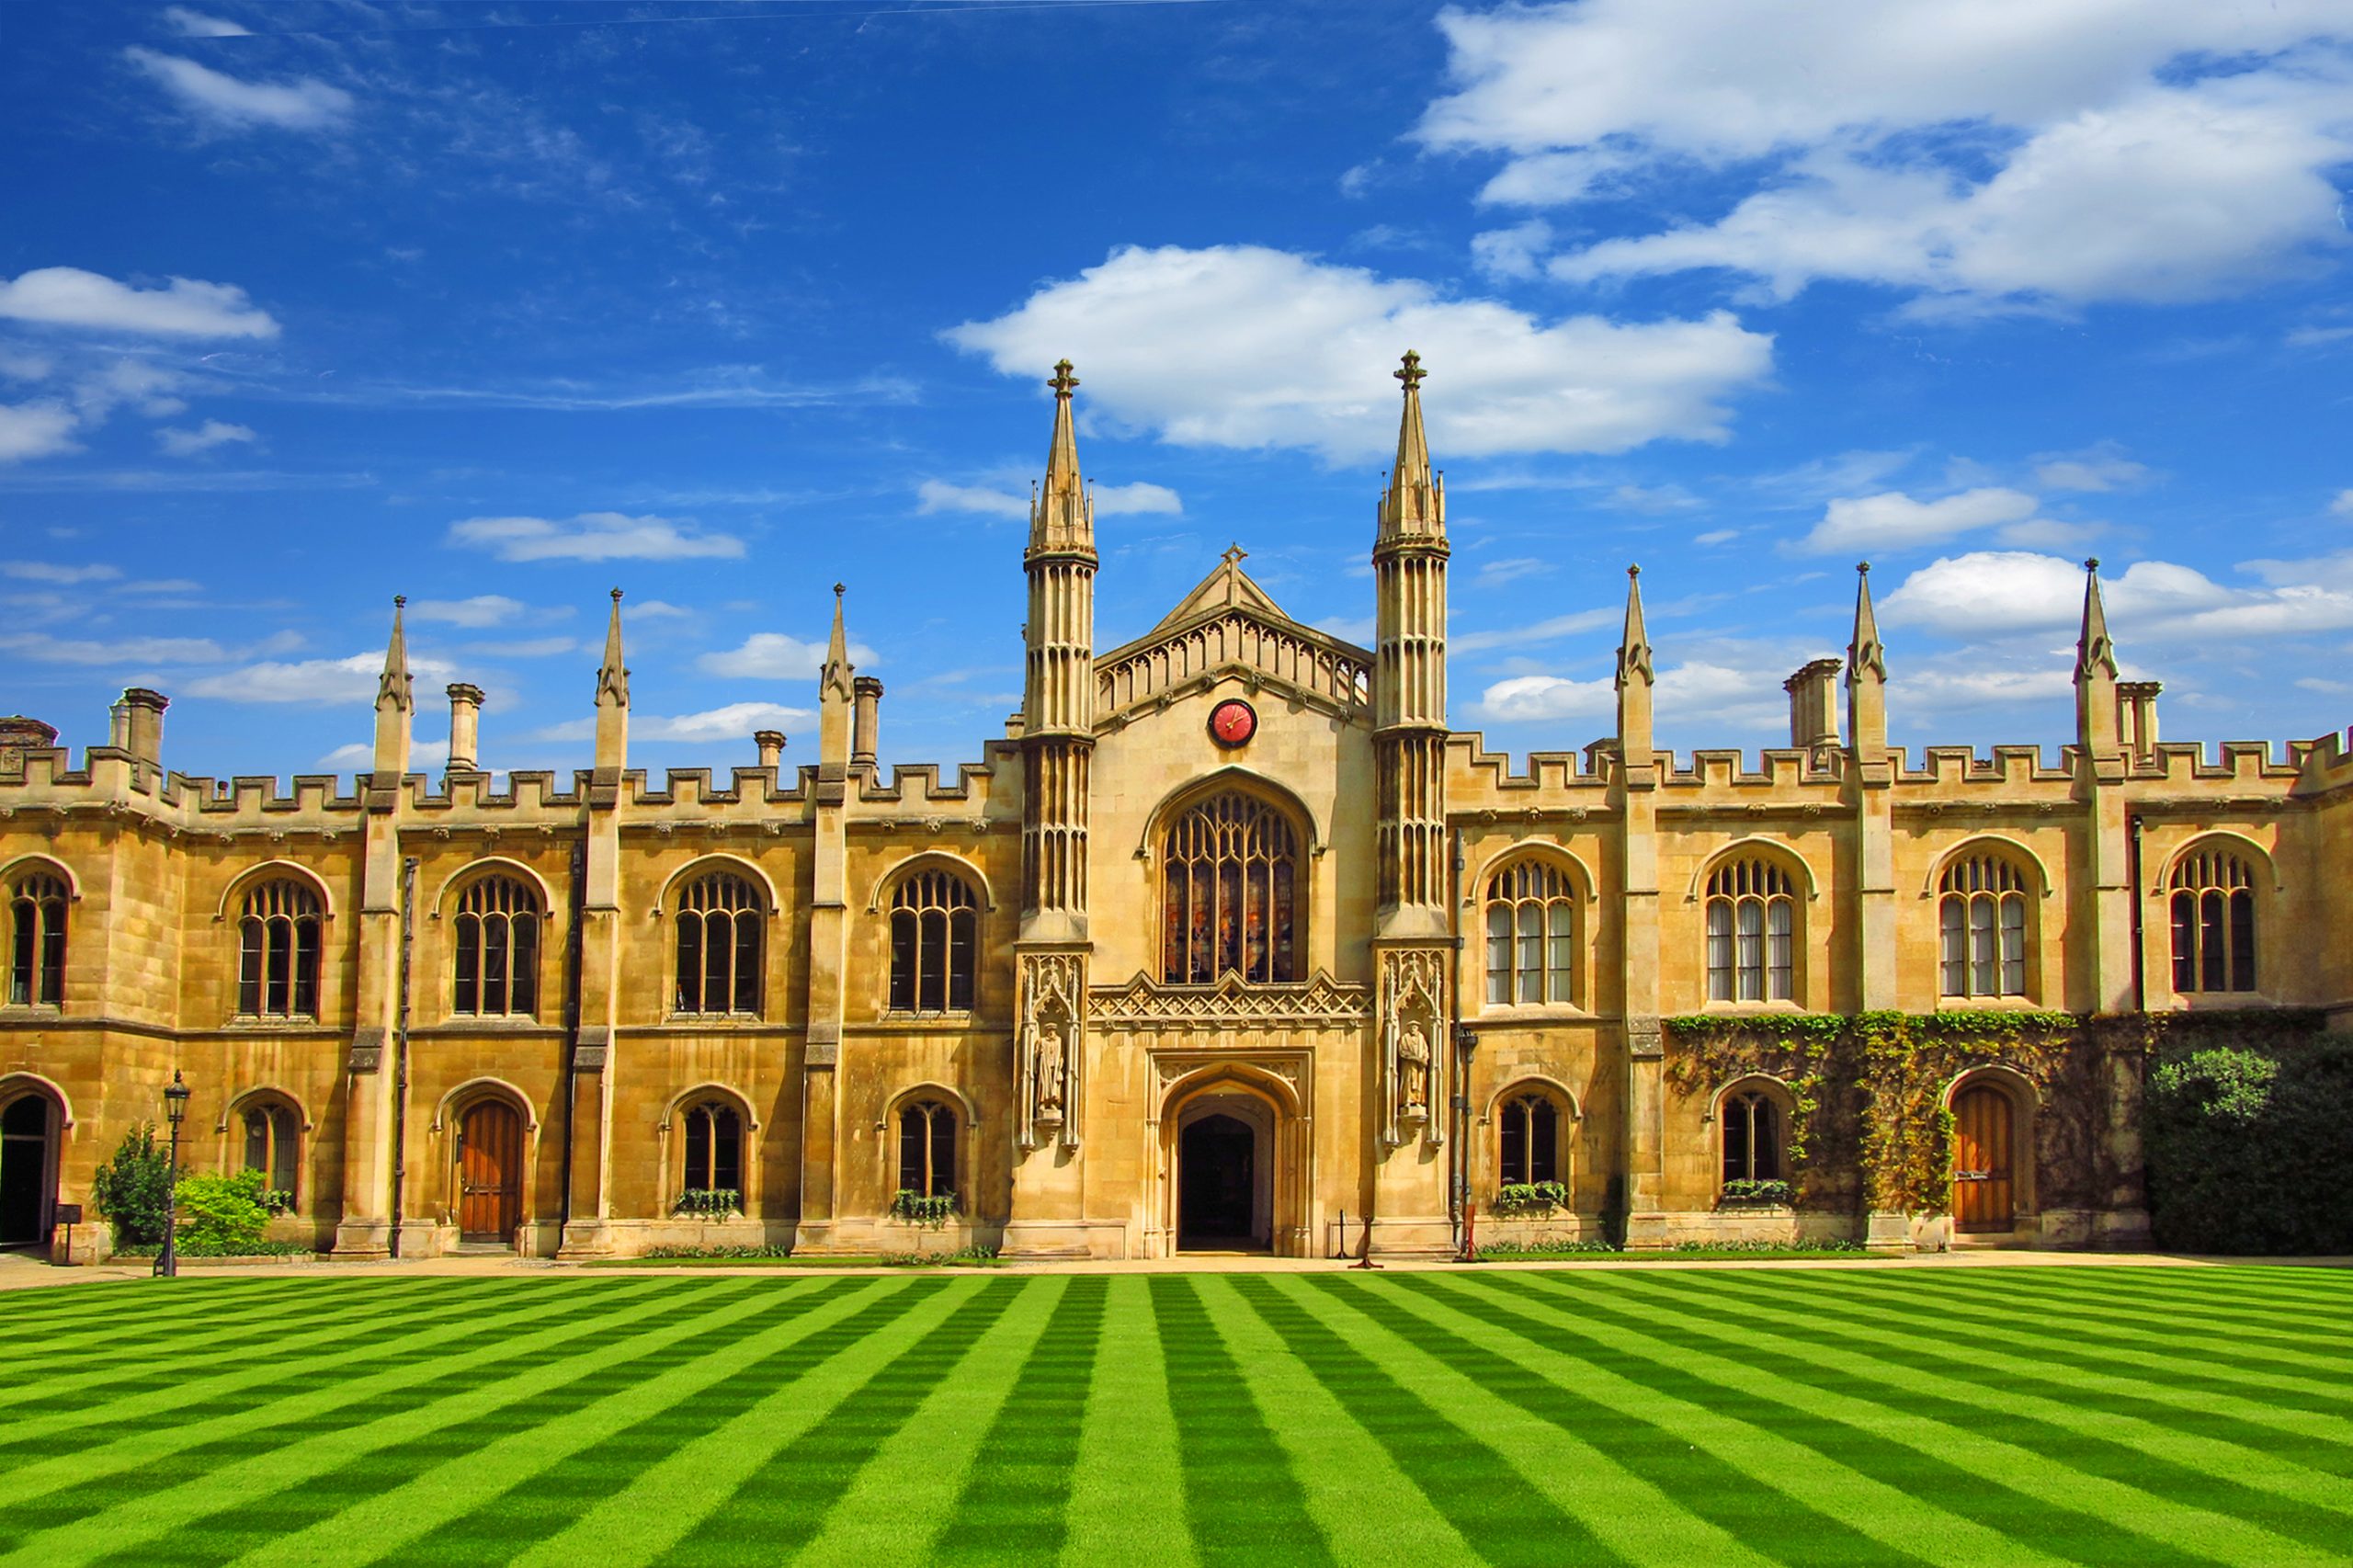 University of Cambridge Lawn